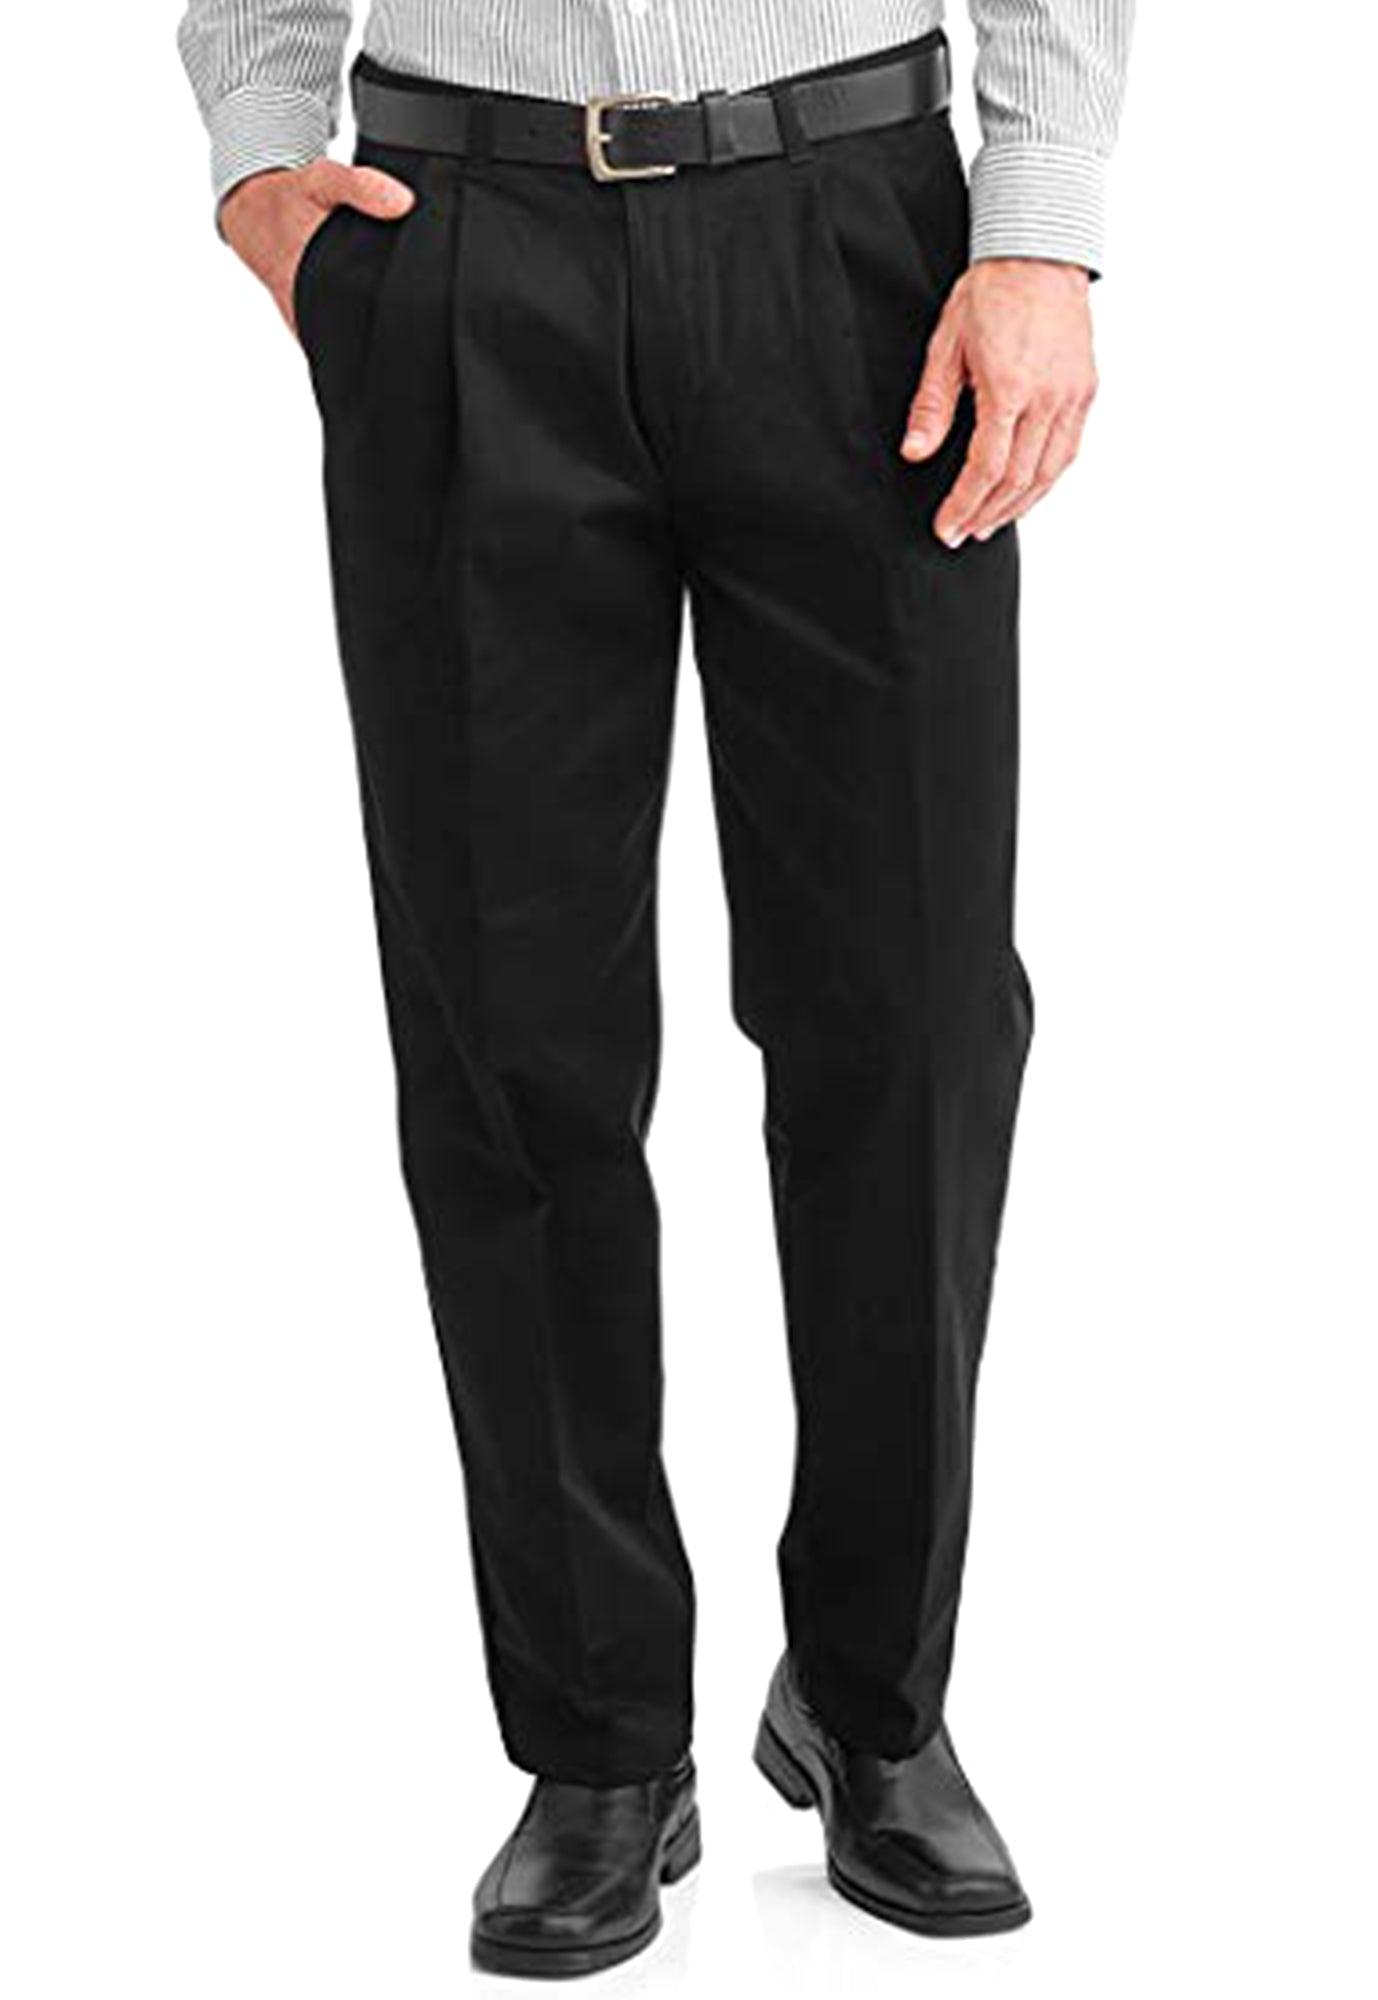 Zara Contrast Waistband Drawstring Pants Cuffed Hem Trousers Dark Taupe Sz  Small | eBay